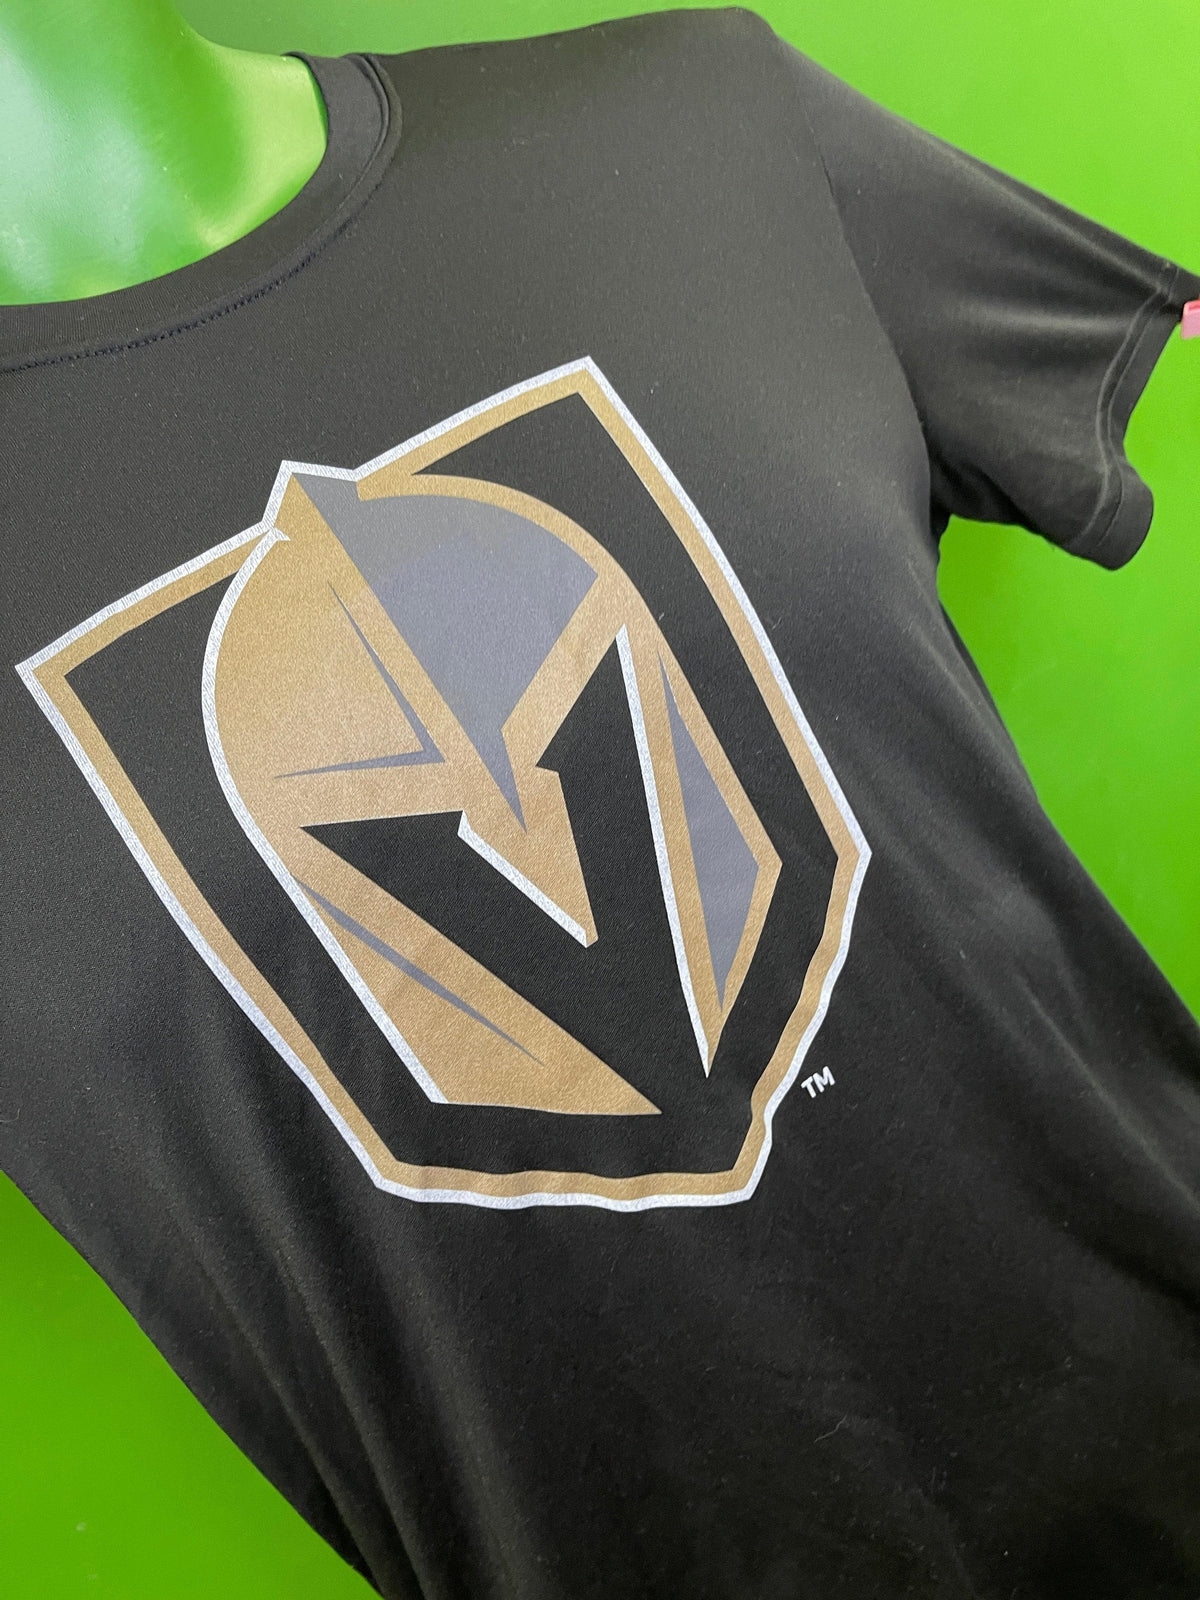 NHL Vegas Golden Knights Black Sports T-Shirt Youth Large